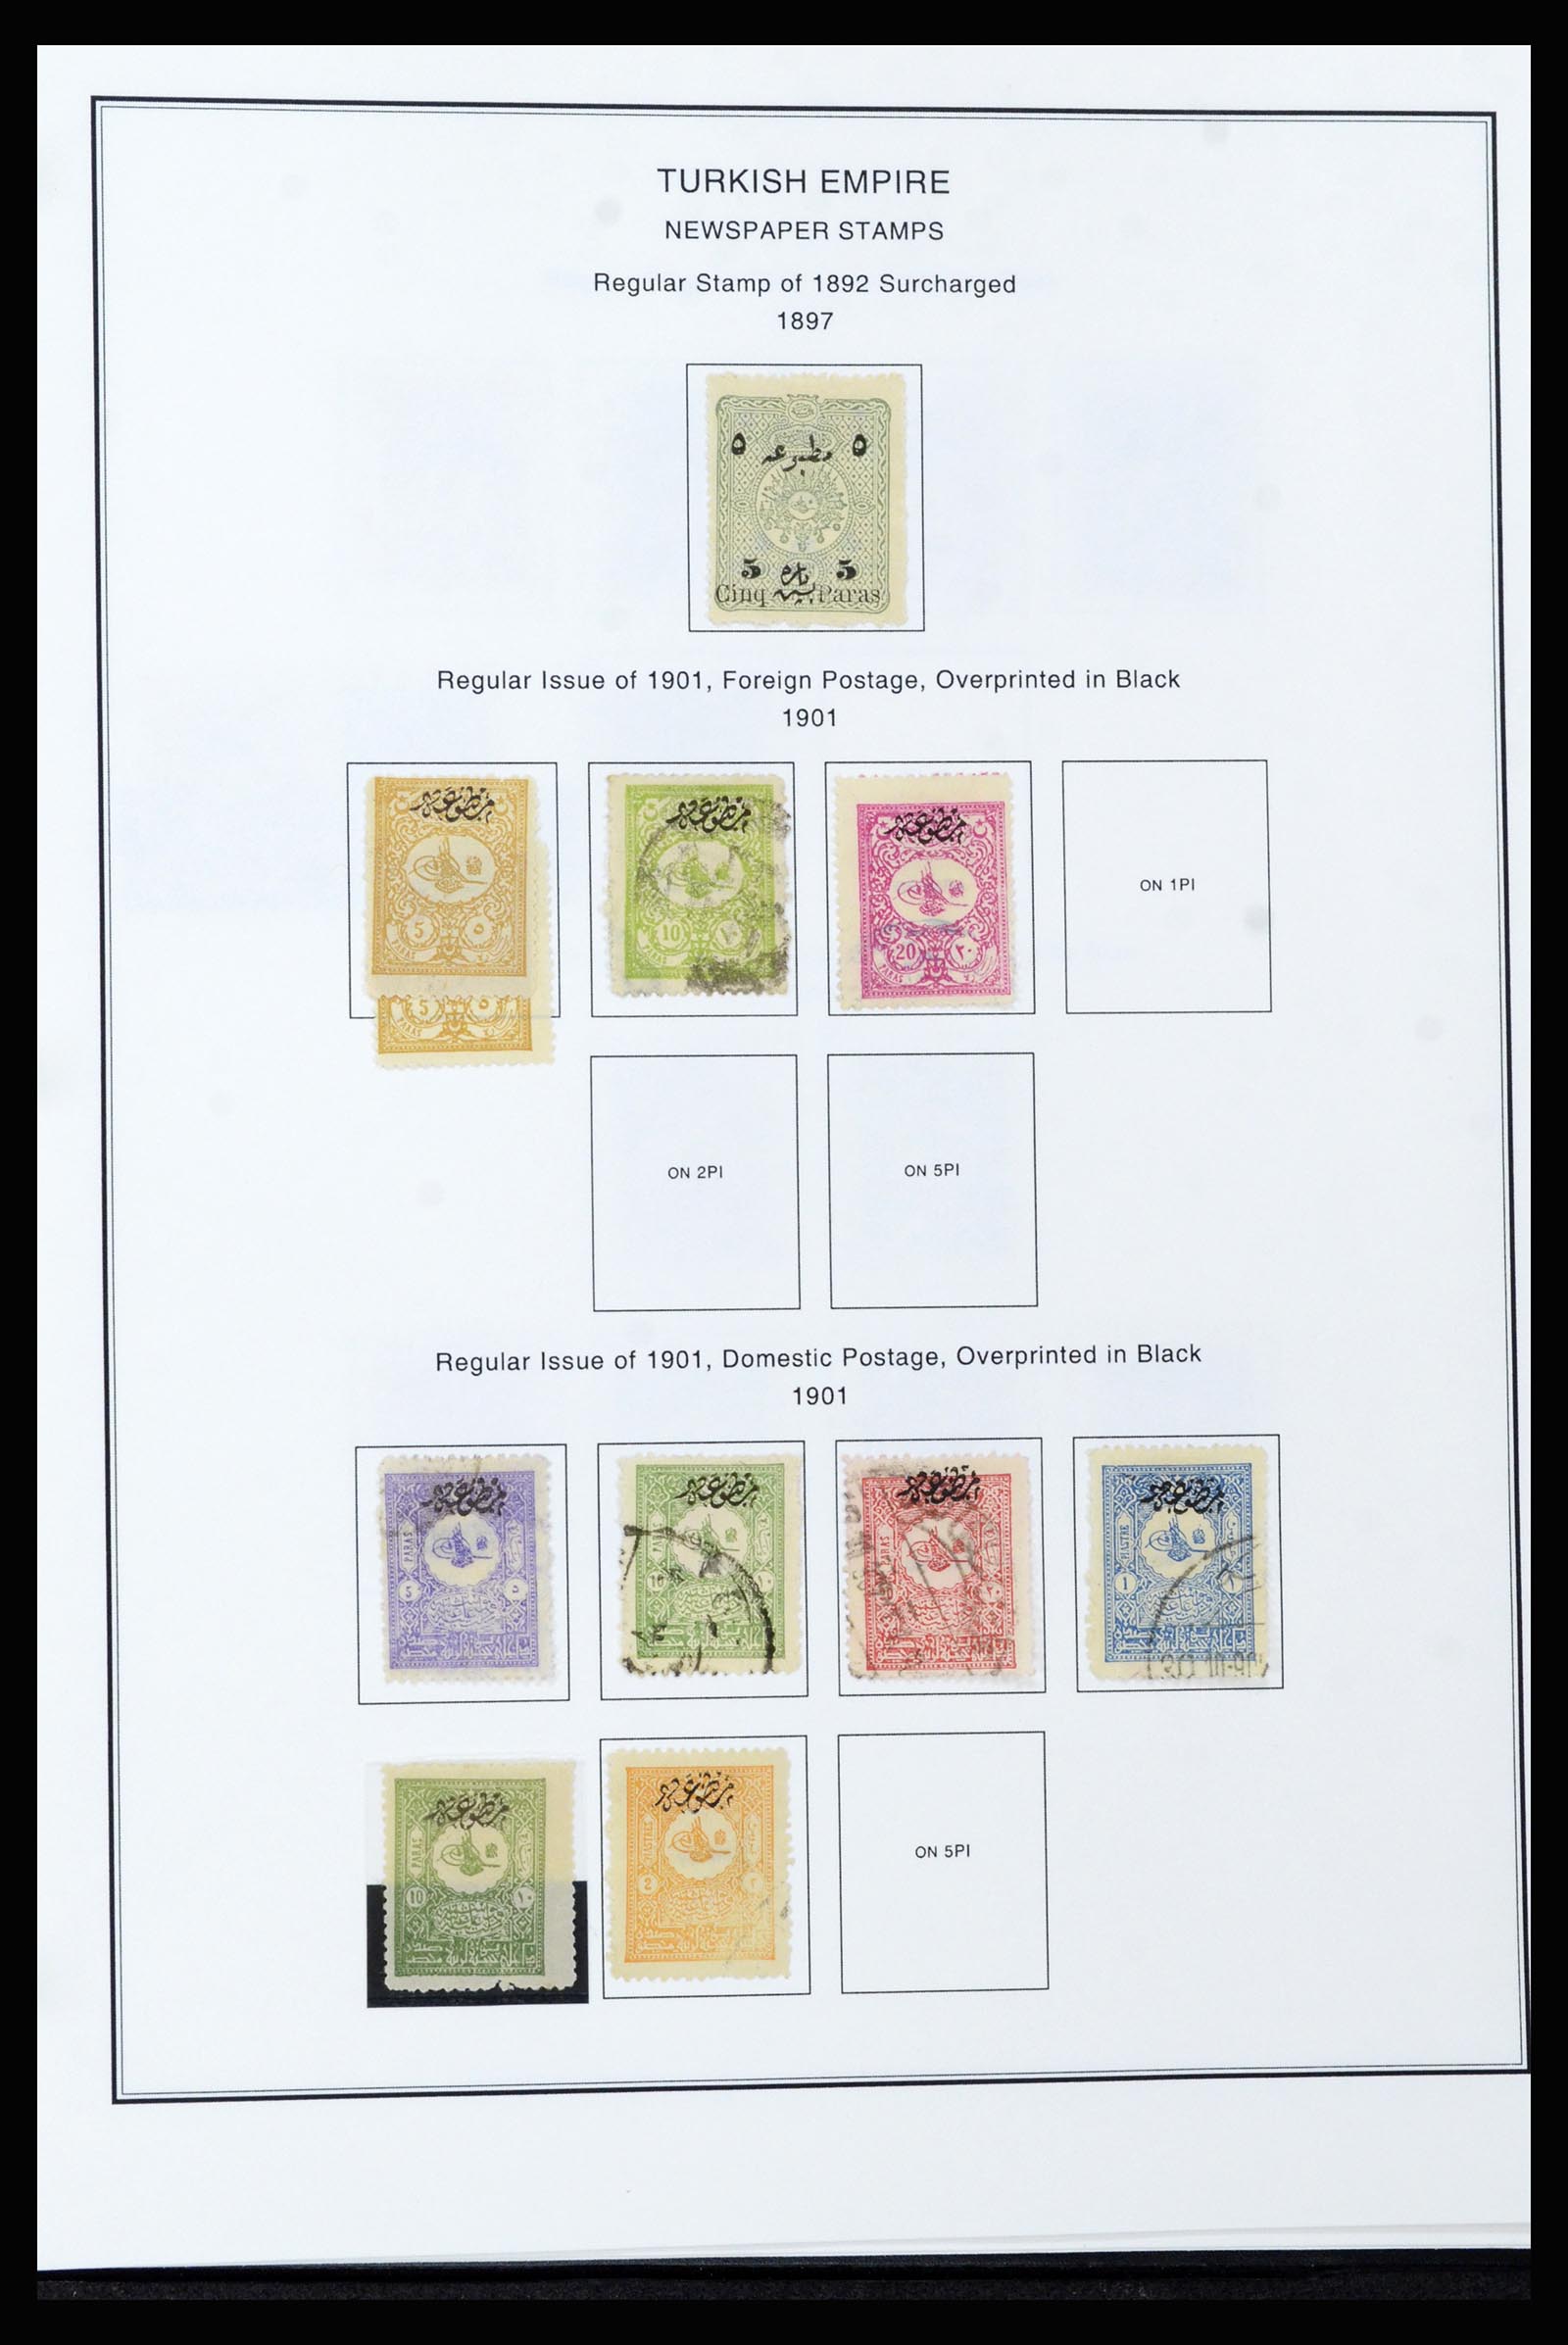 37224 081 - Stamp collection 37224 Turkey 1863-2000.